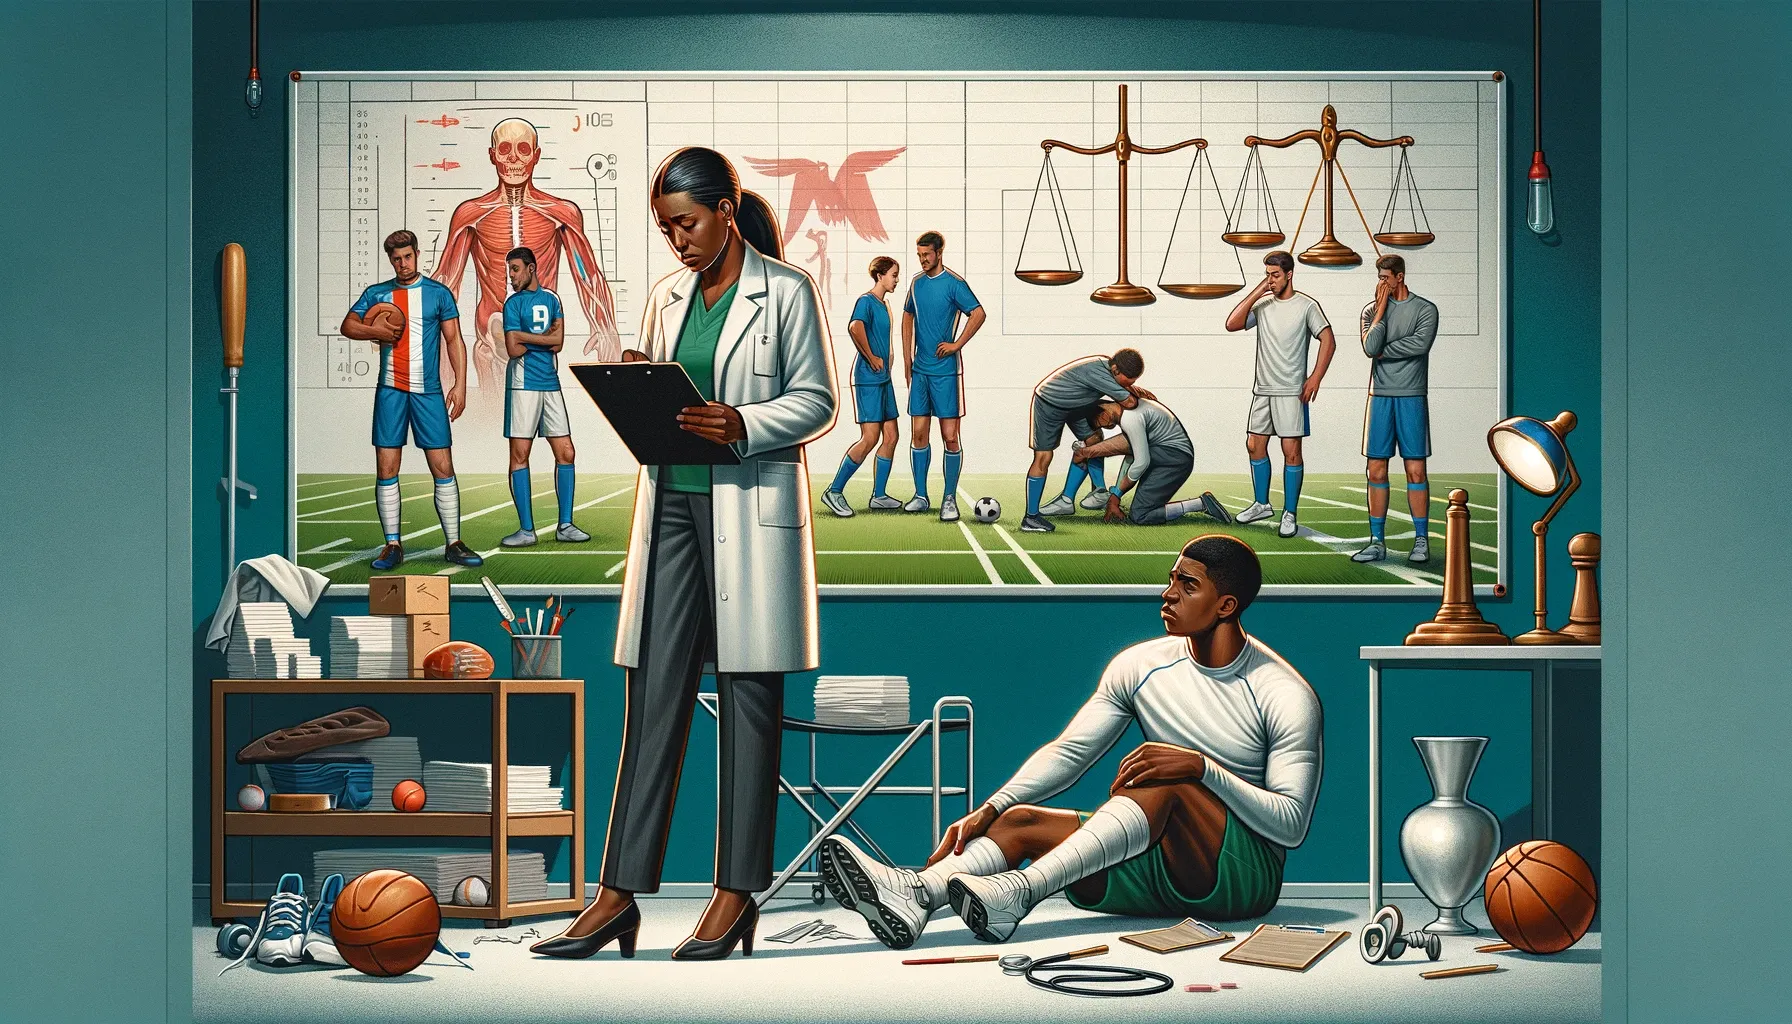 Negligence Sports Medicine Definition